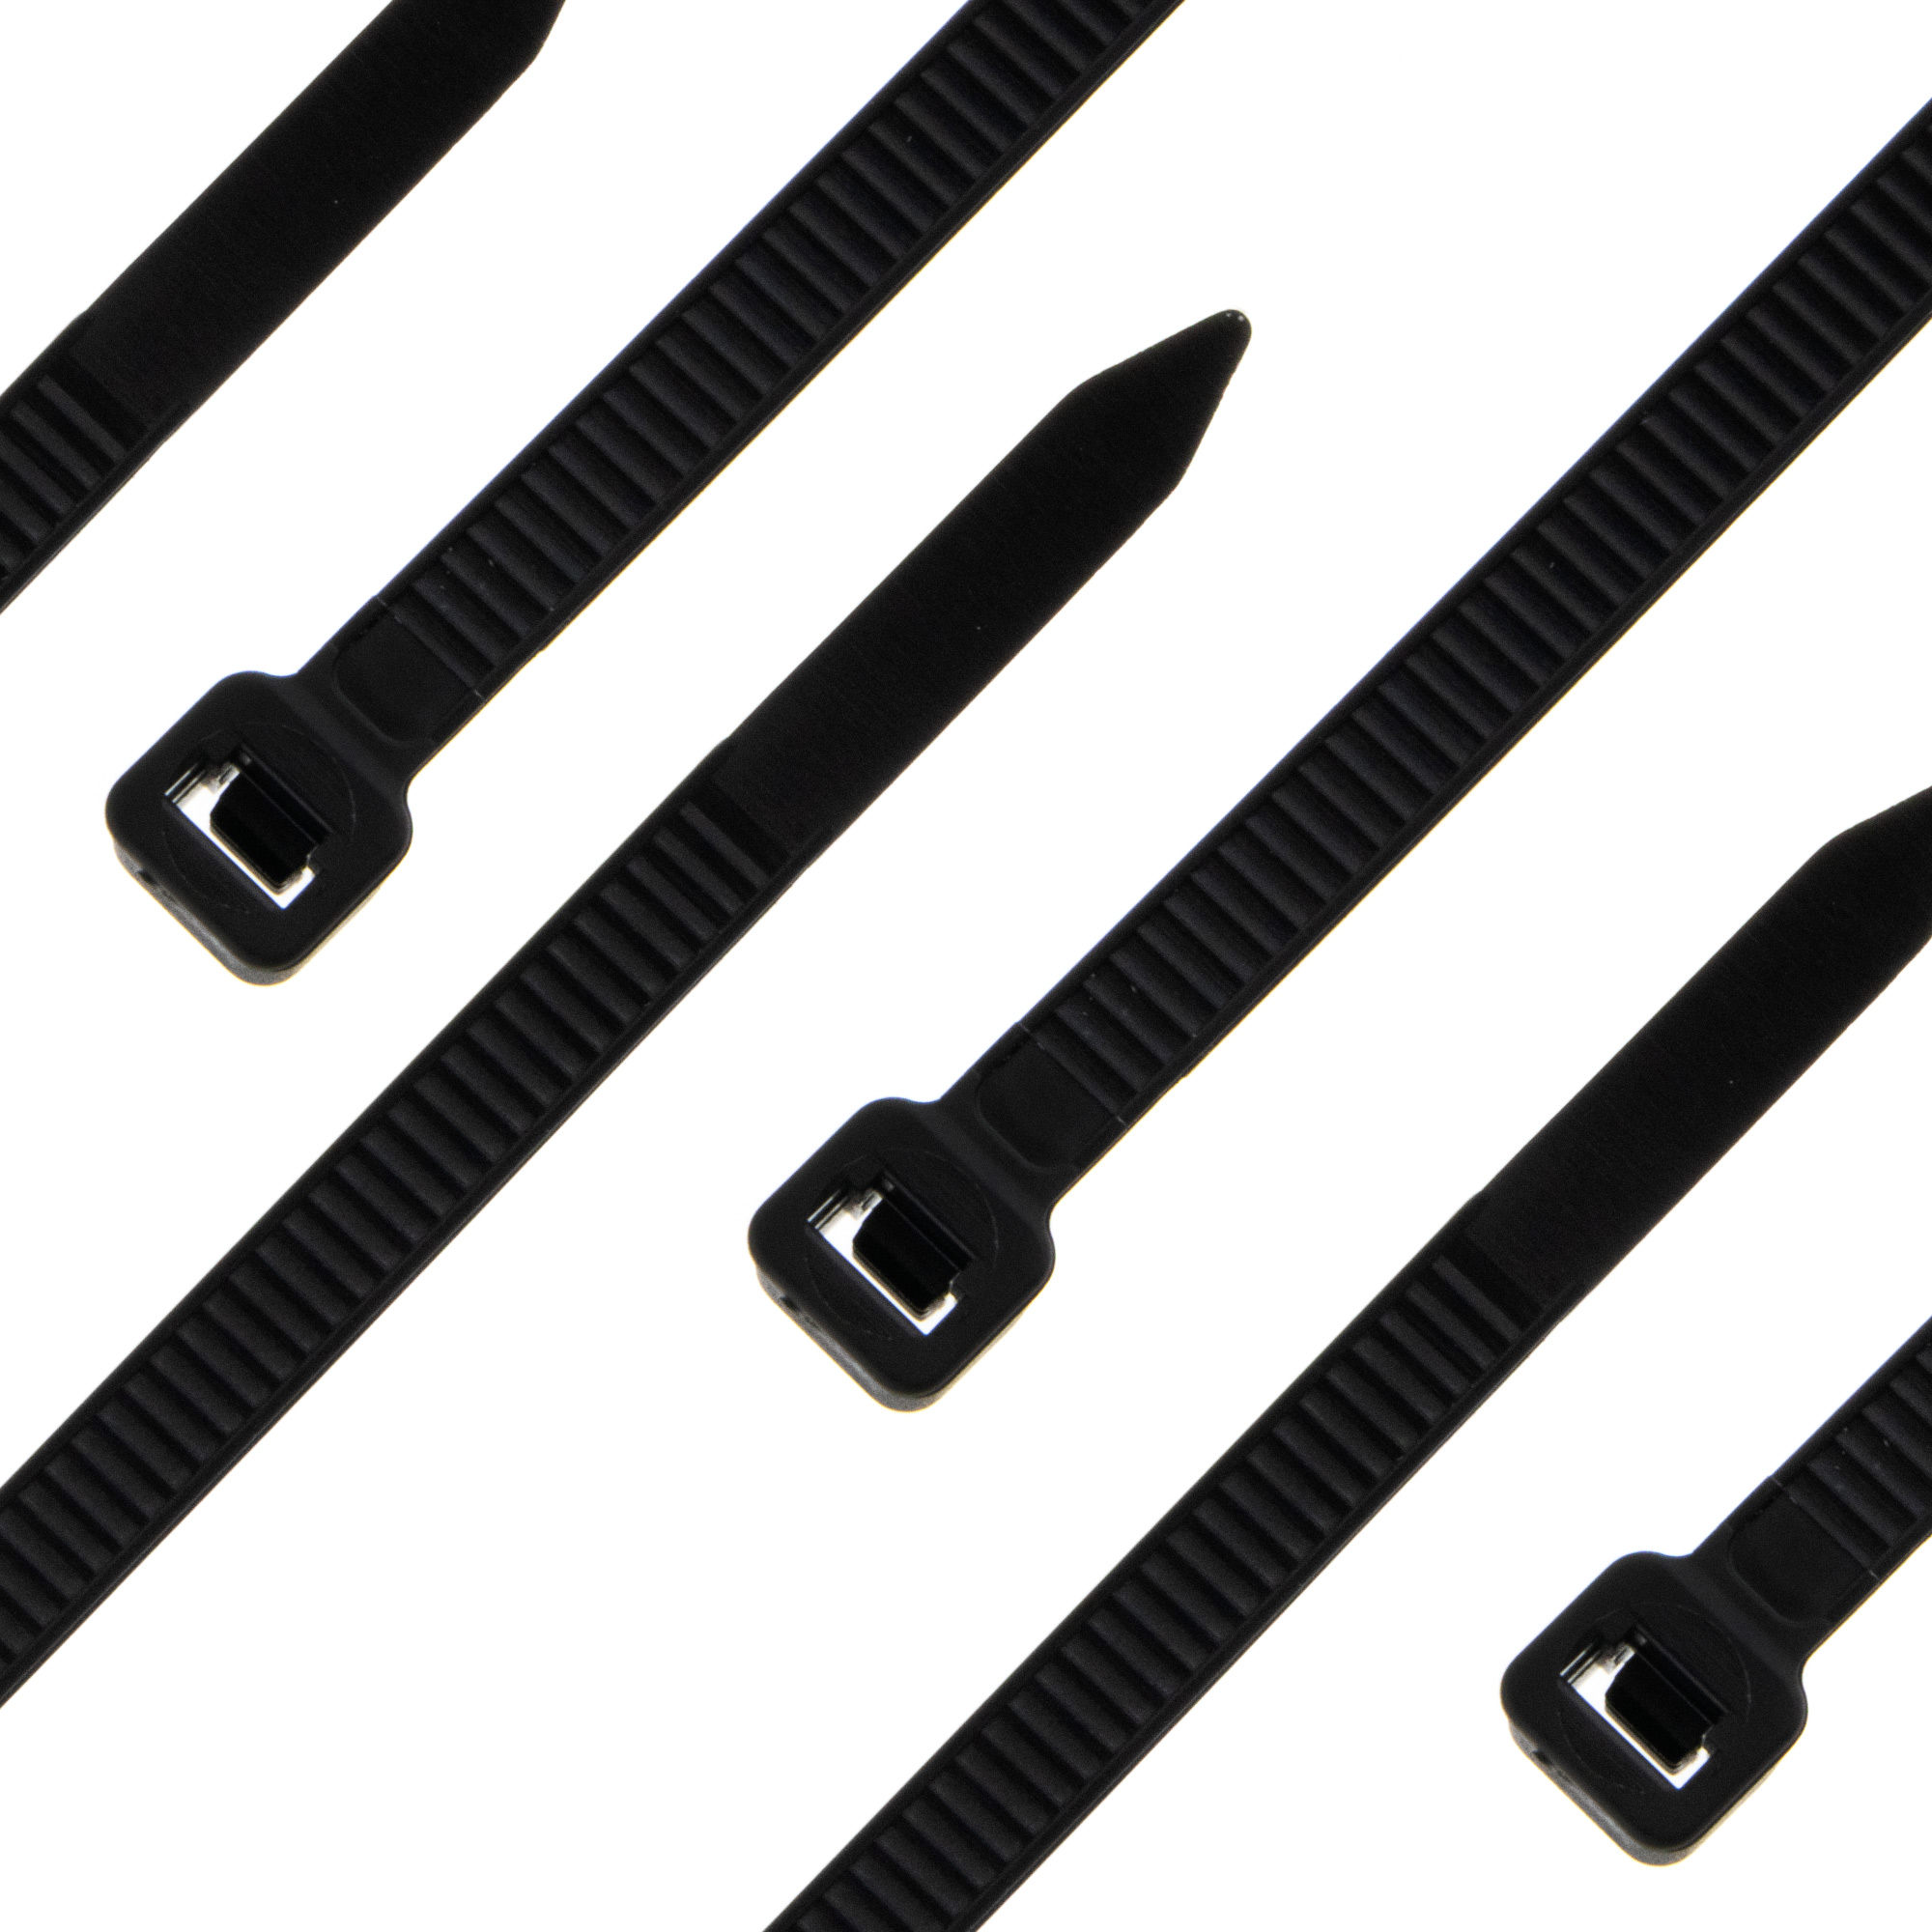 Cable tie self-locking 150 x 2,5mm, black, 100PCS